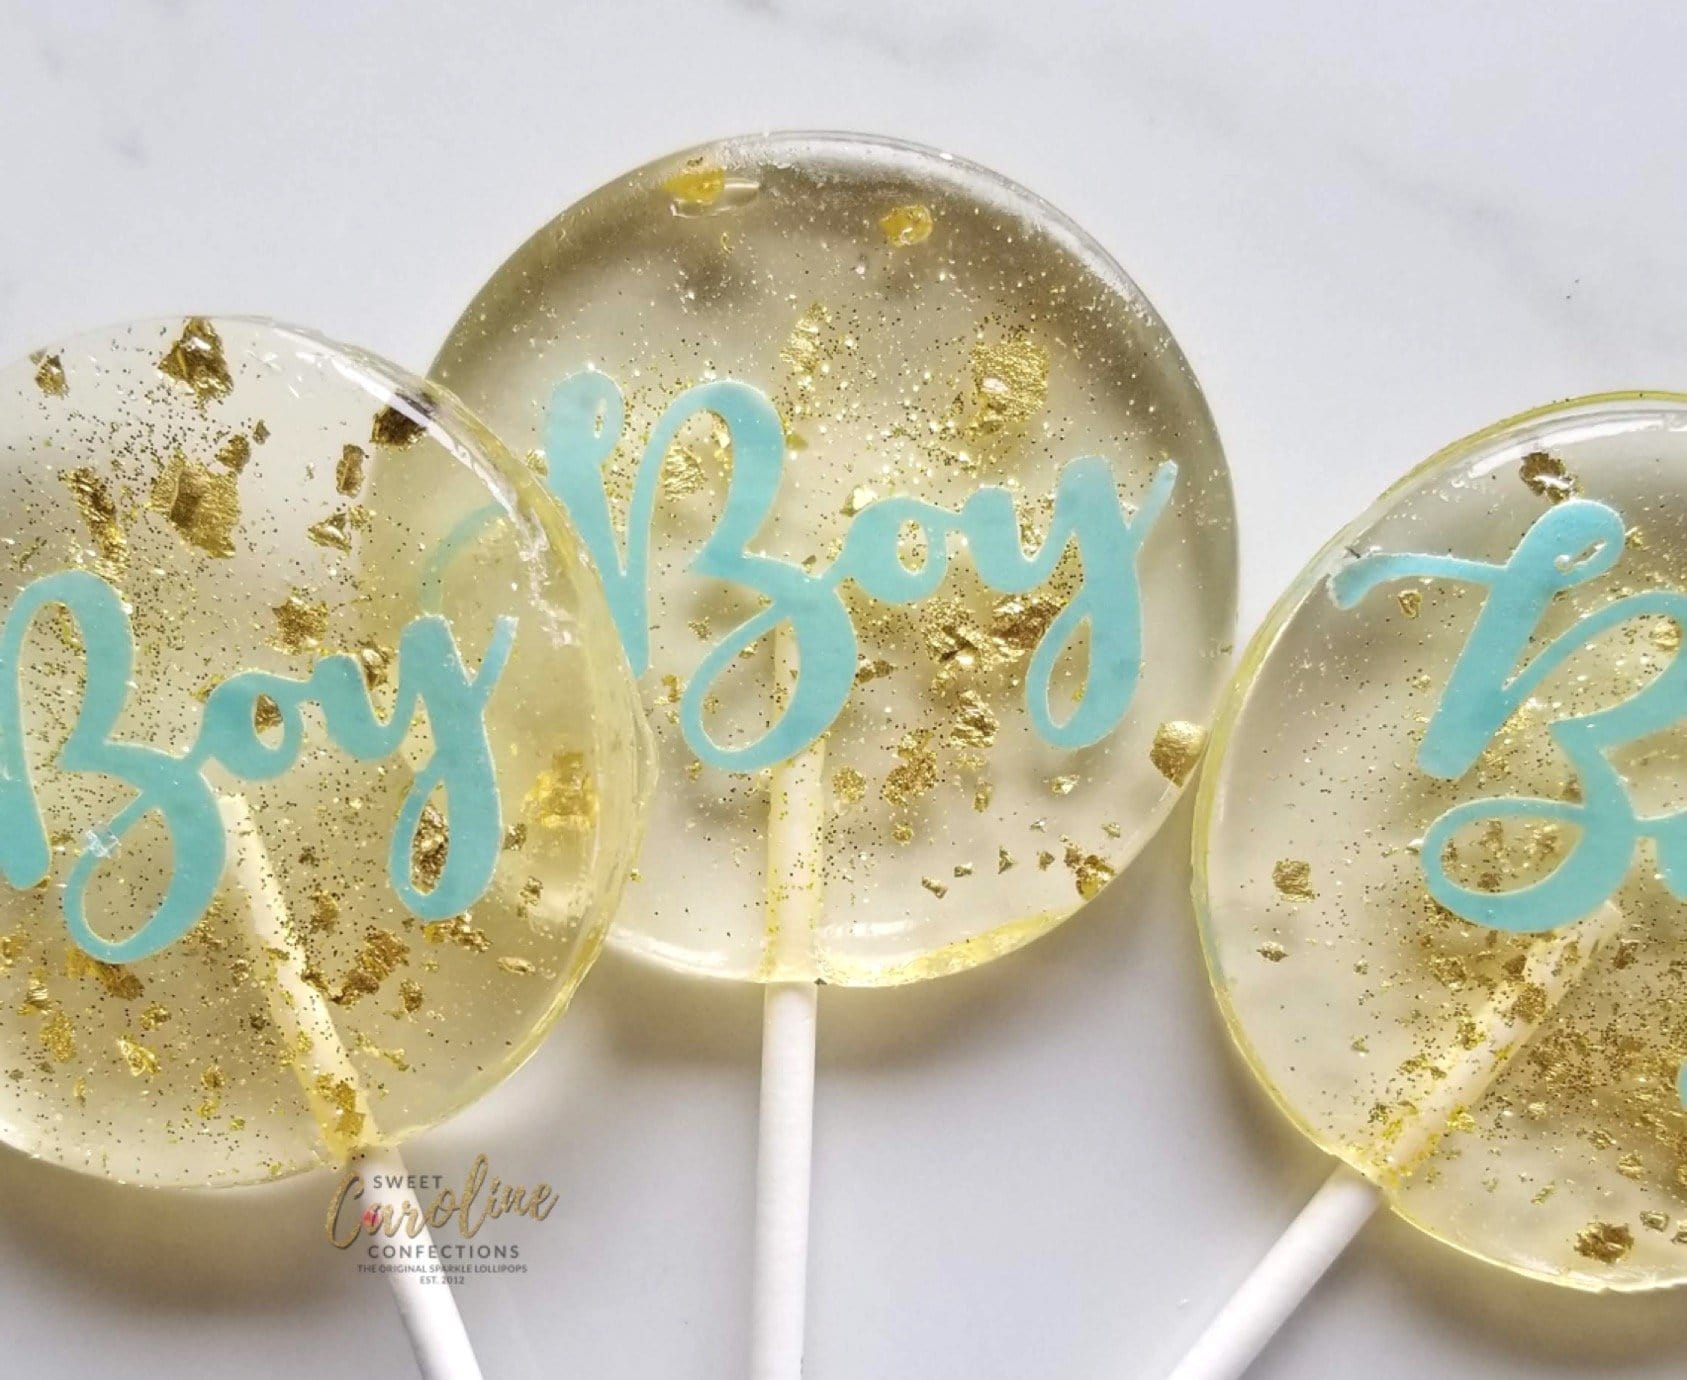 Baby Boy Lollipops - Set of 6 - Sweet Caroline Confections | The Original Sparkle Lollipops